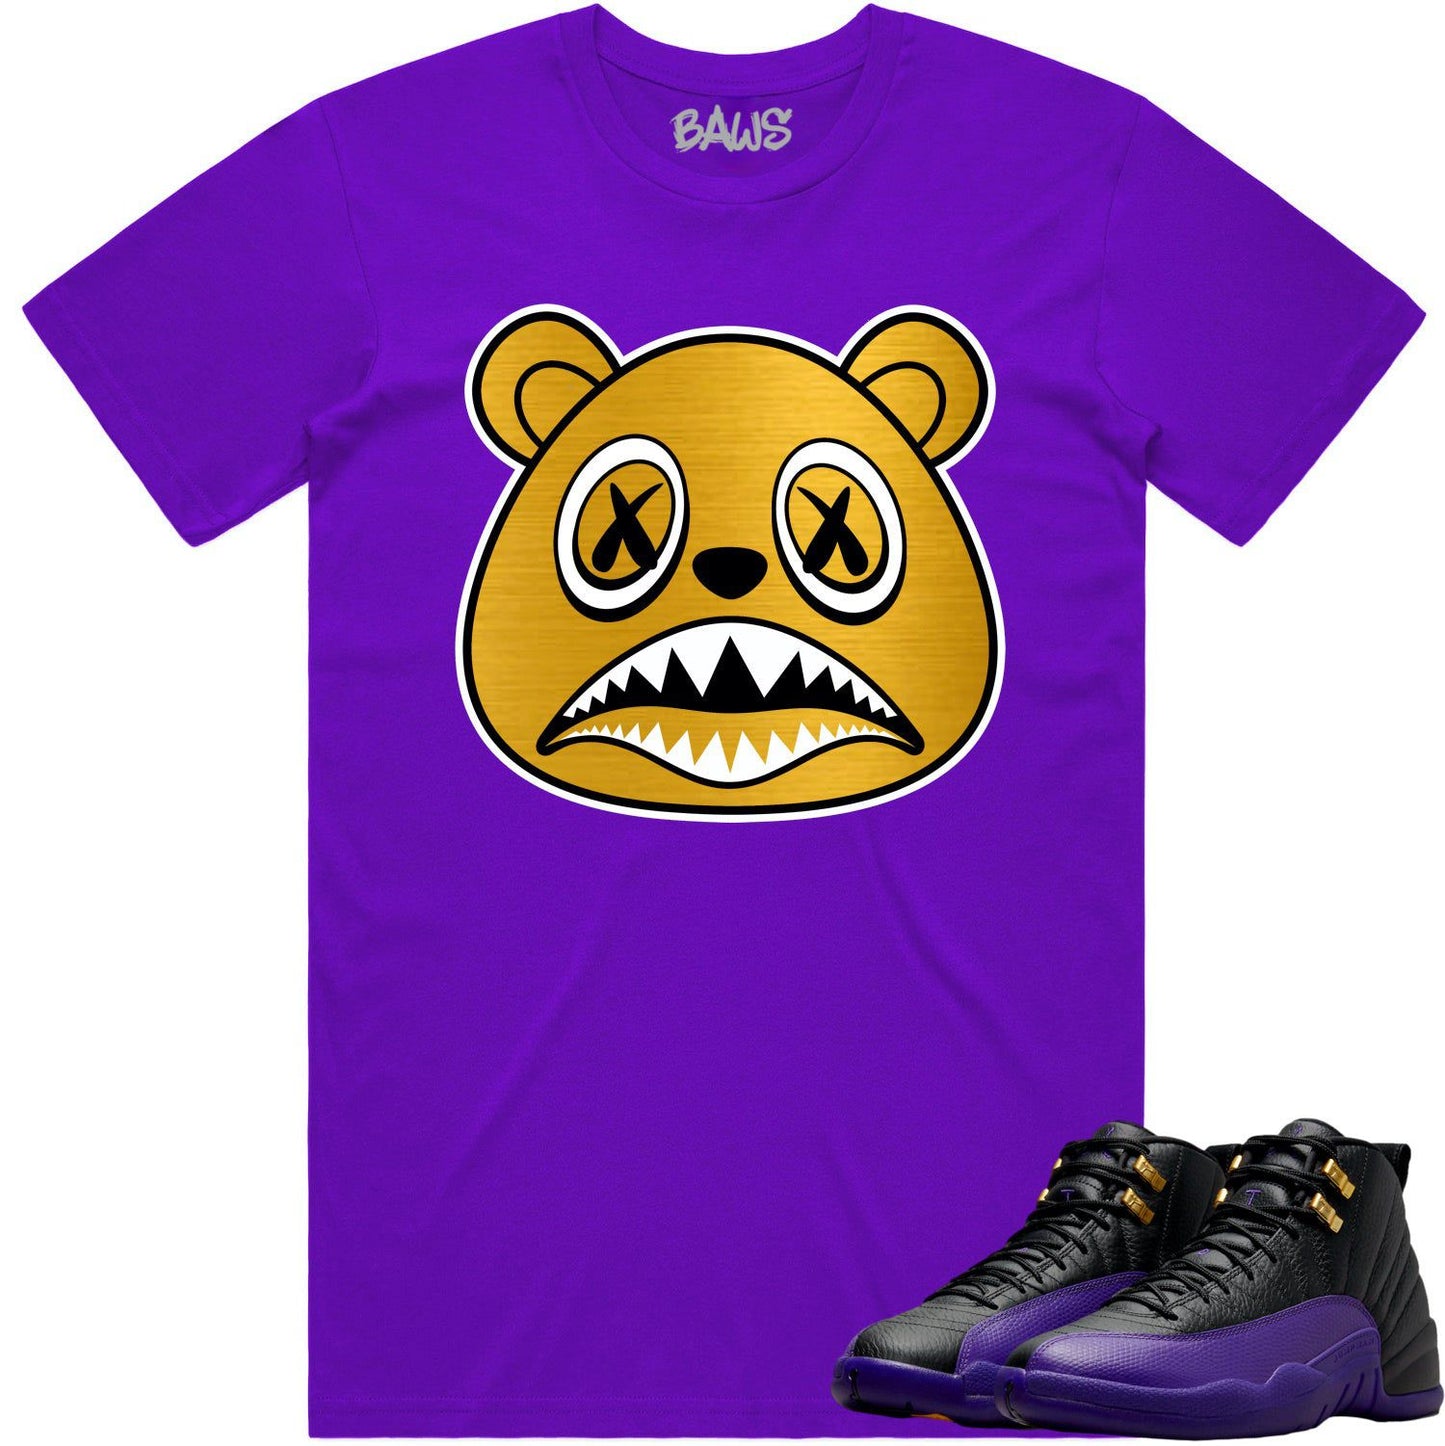 Field Purple 12s Shirt - Jordan 12 Field Purple Shirts - Baws Bear